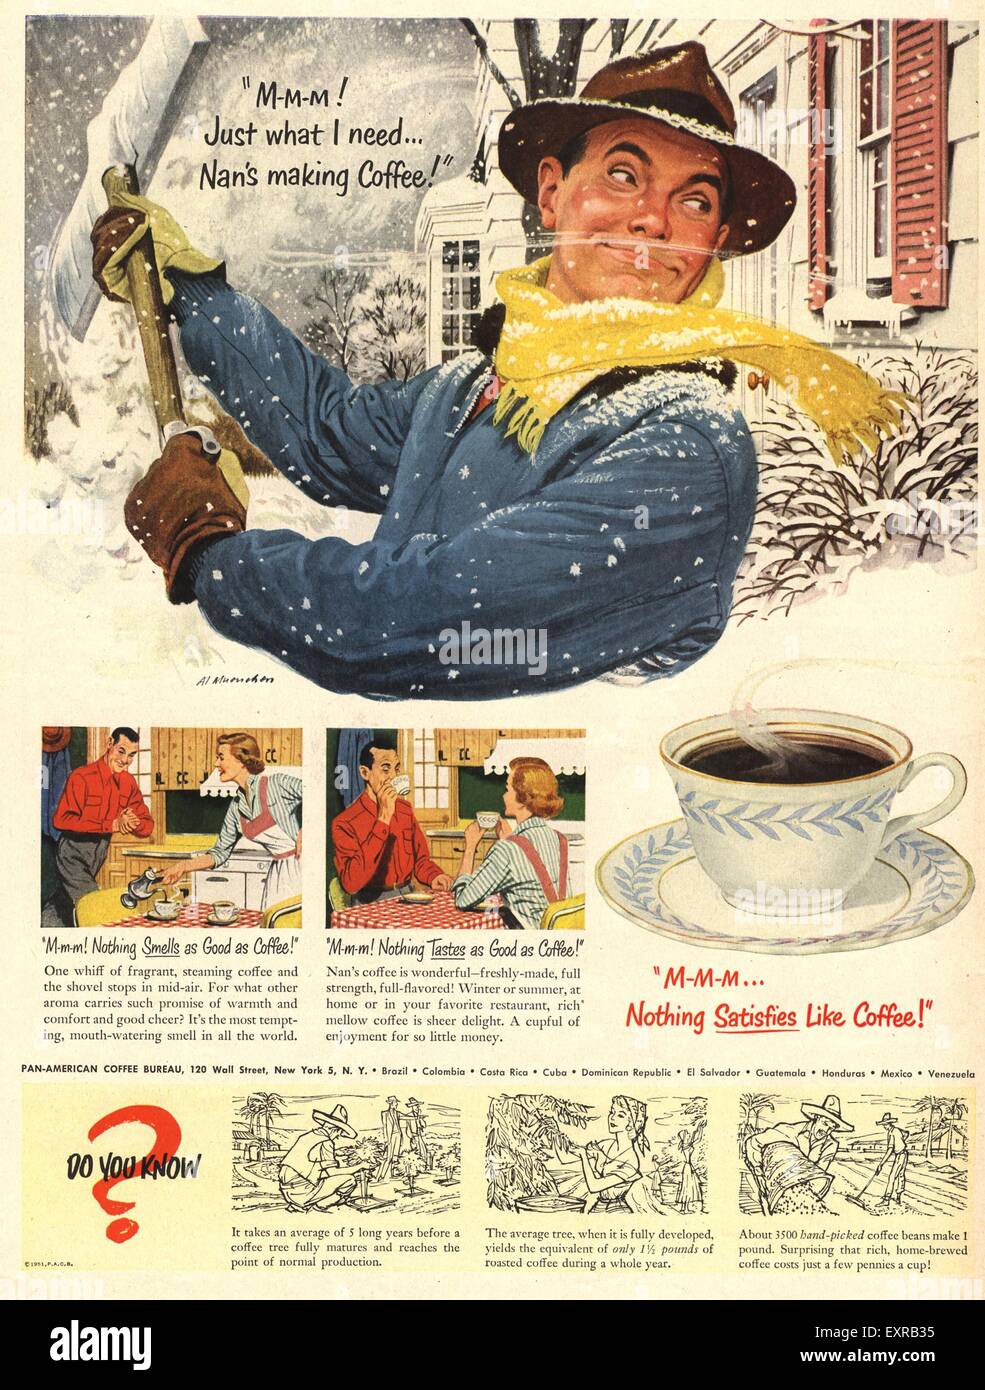 1950s USA Coffee Magazine Advert Stock Photo